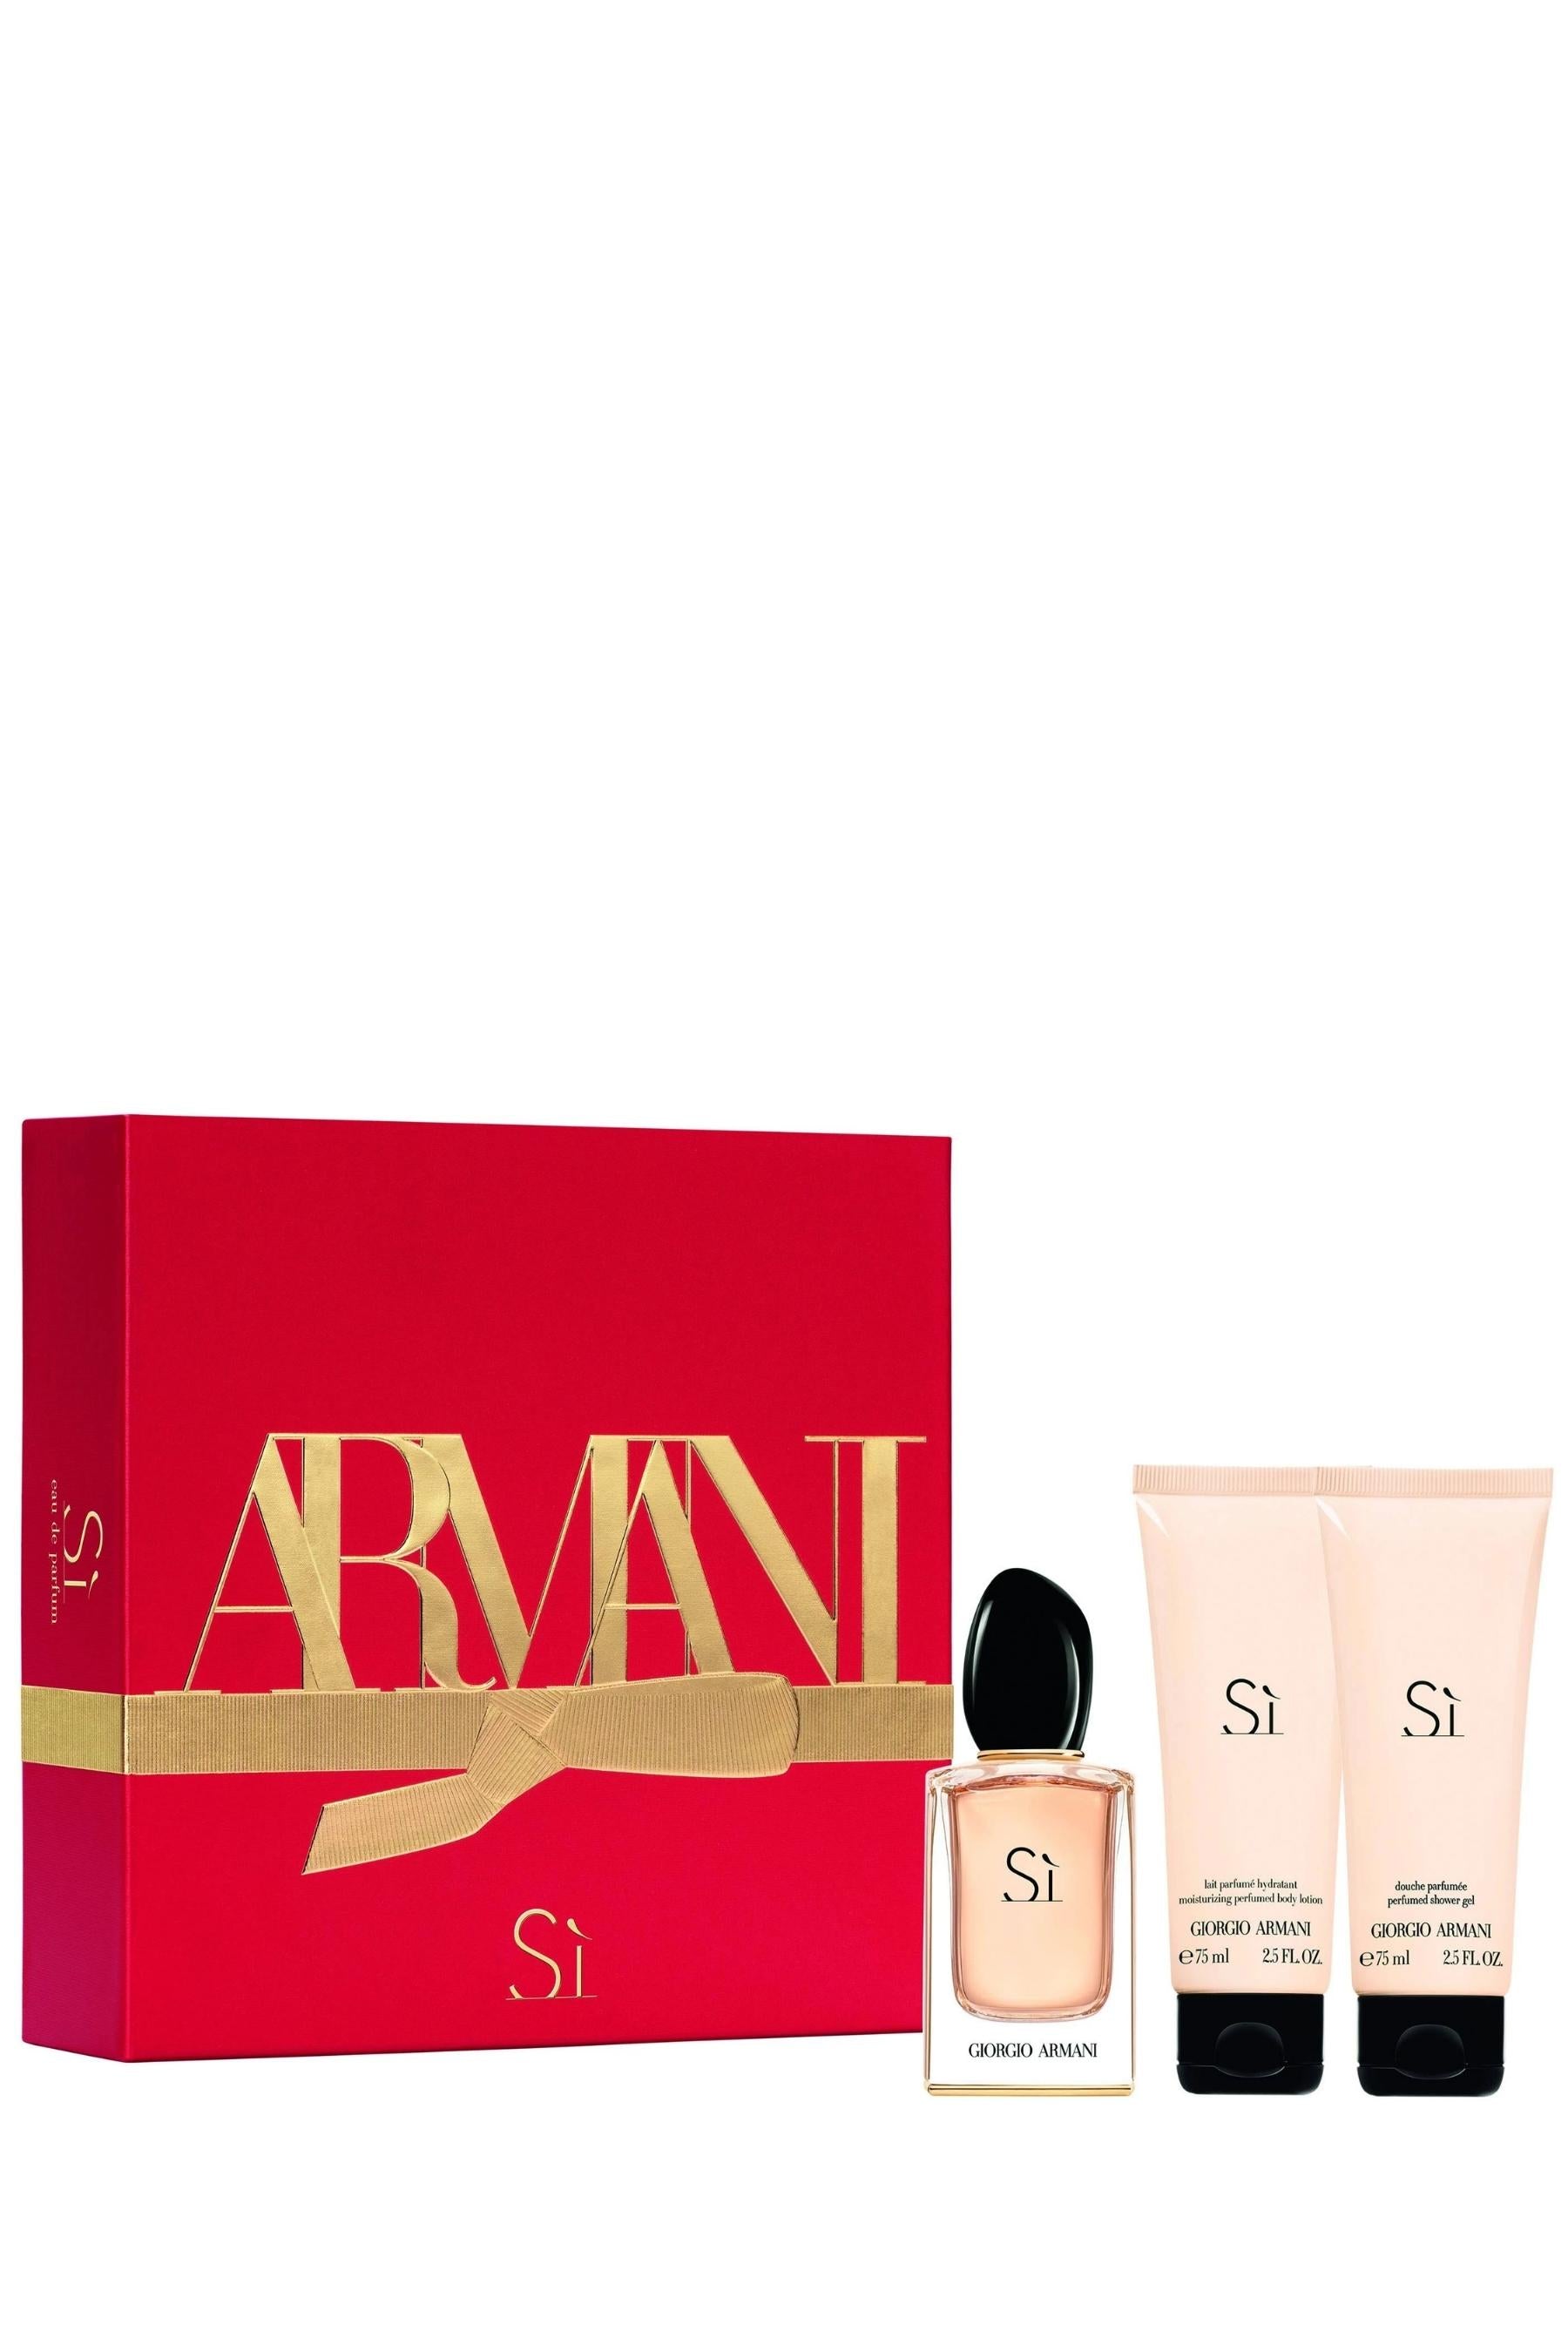 Uitmaken Diagnostiseren Veraangenamen Si Perfume by Giorgio Armani | REBL Scents